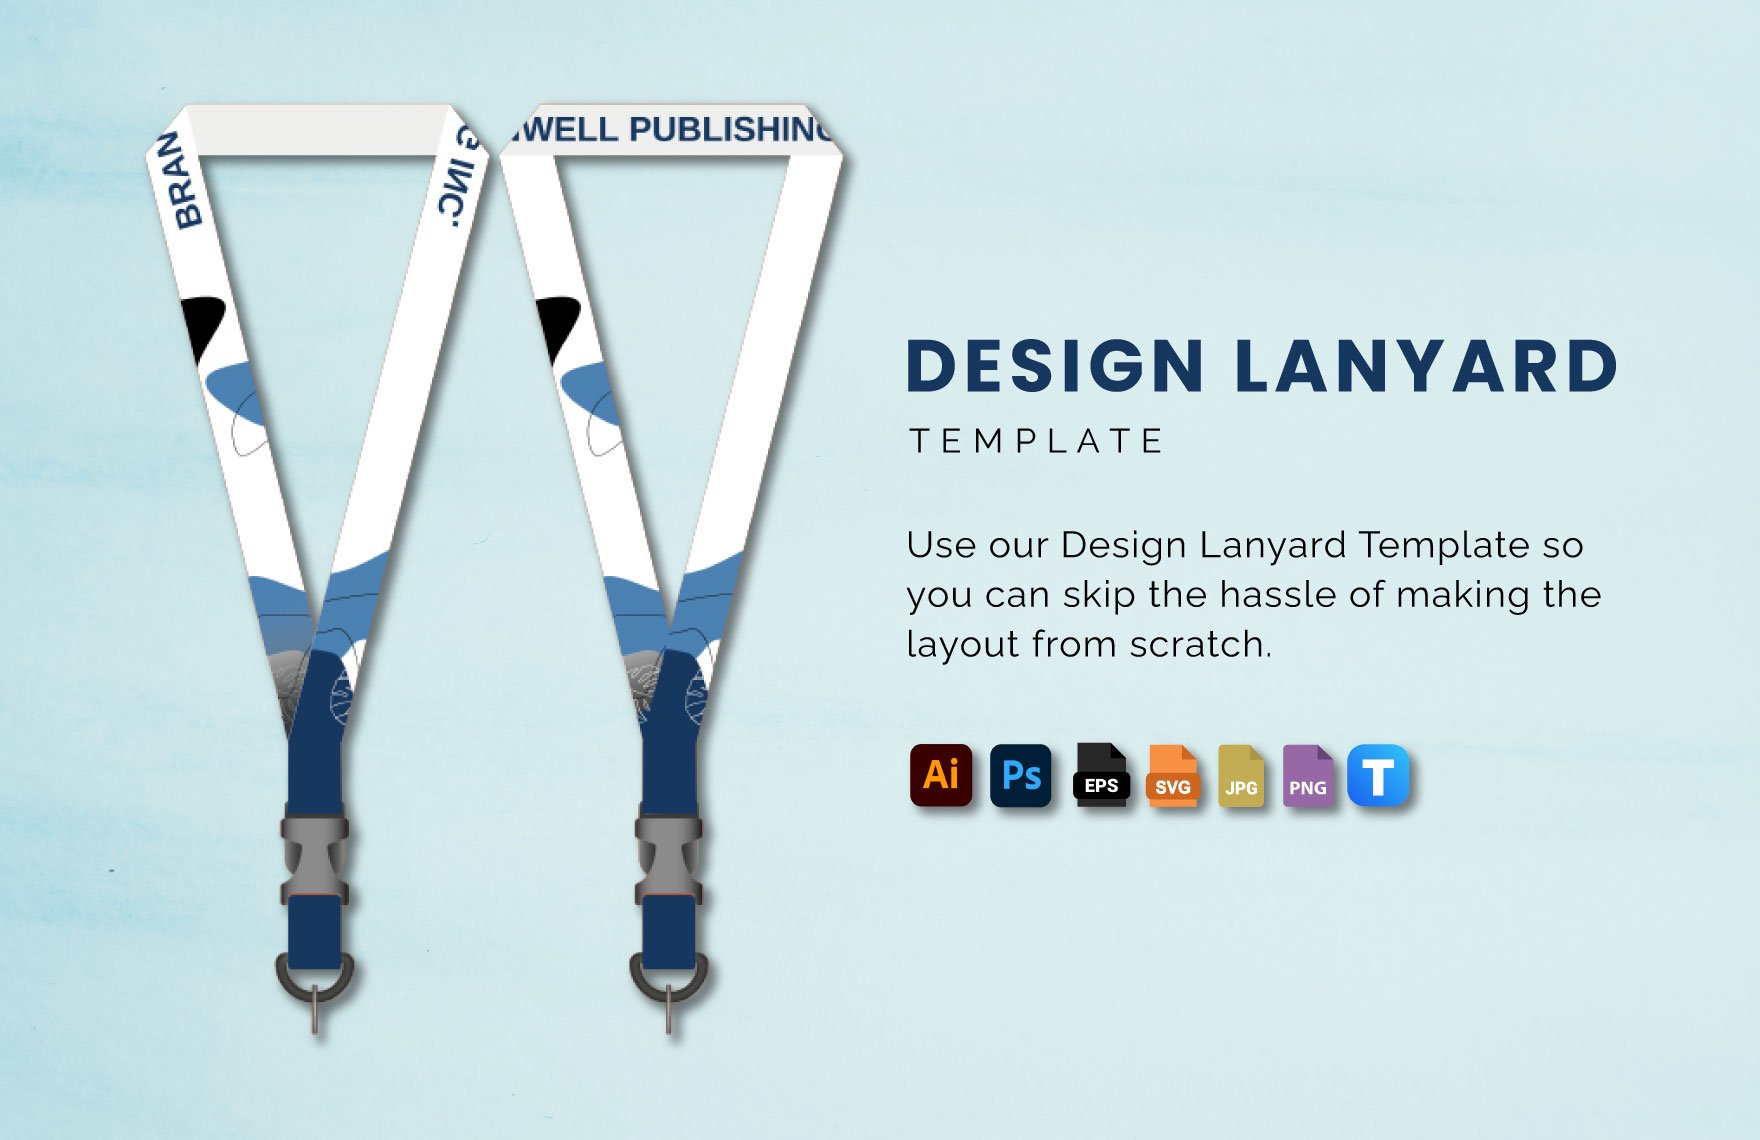 Design Lanyard Template in EPS Illustrator JPG PNG SVG PSD